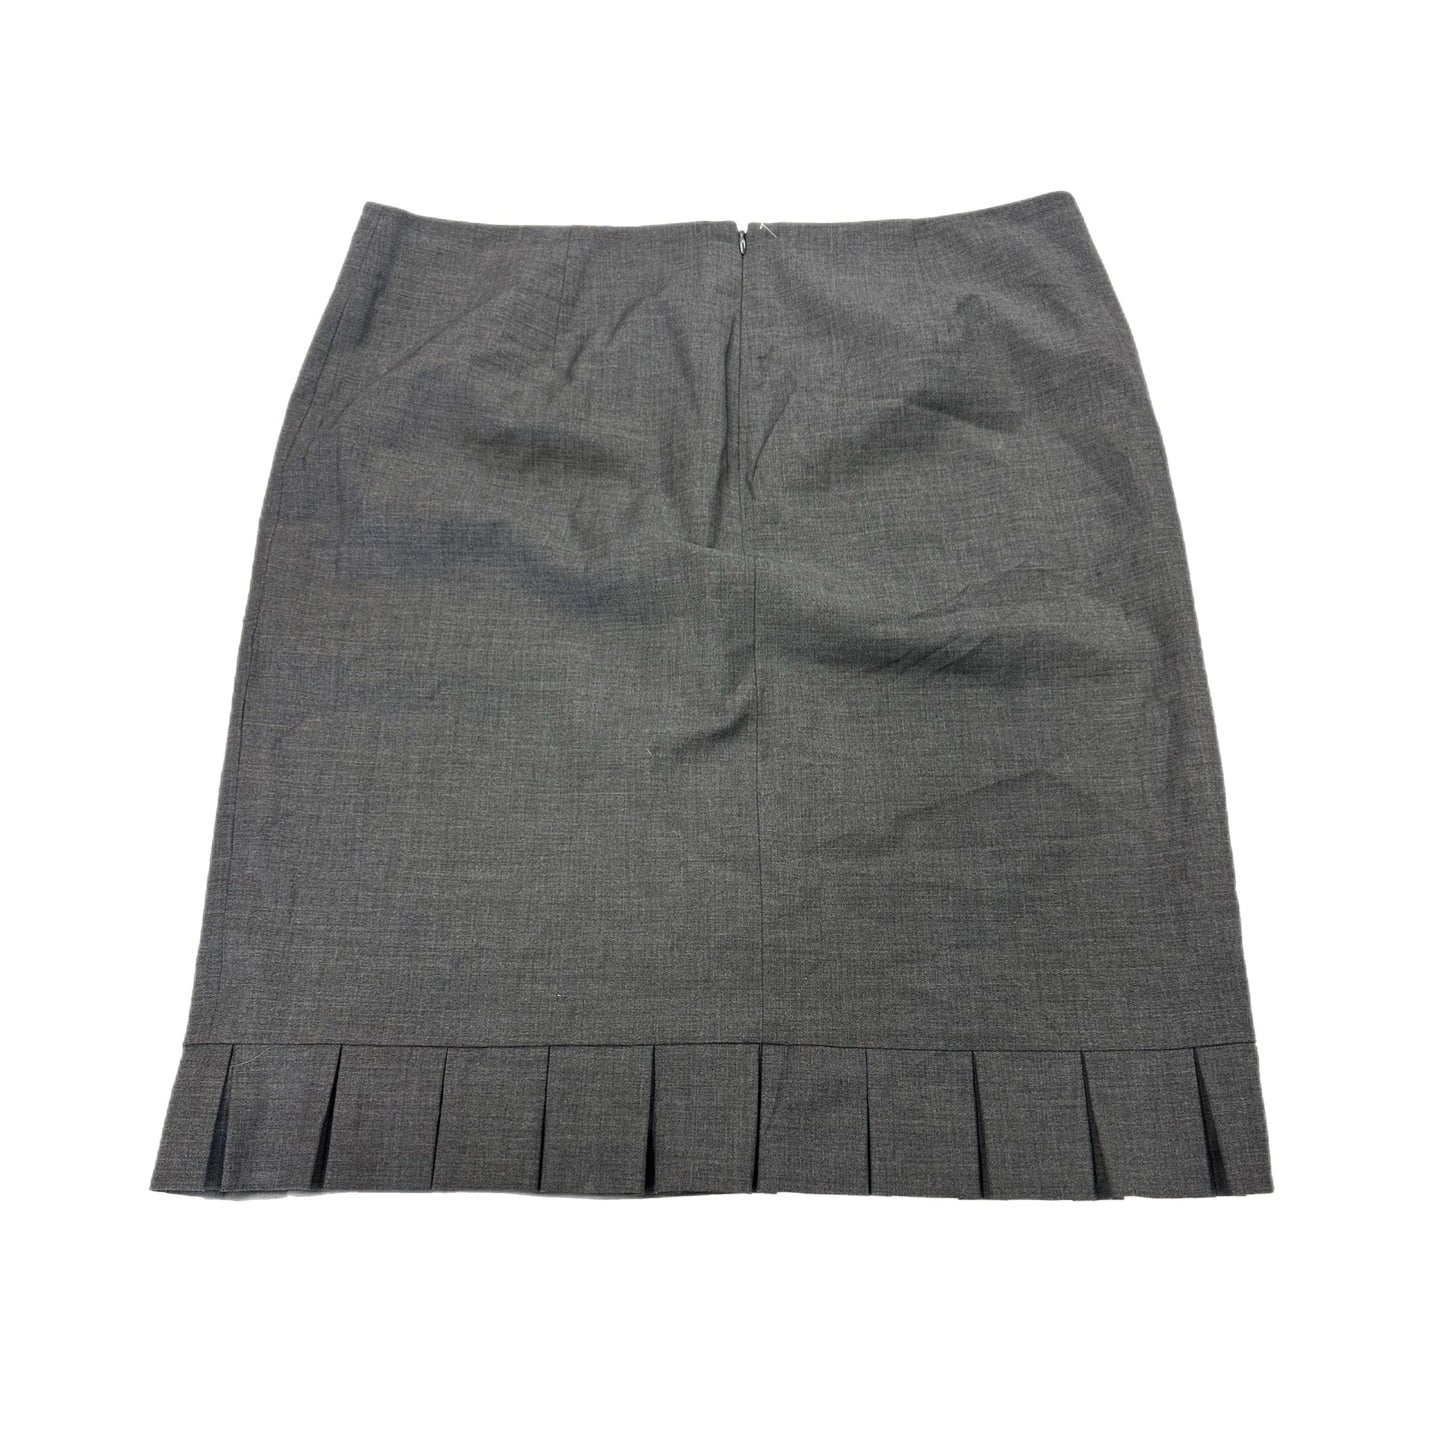 Skirt Mini & Short By Talbots  Size: 18